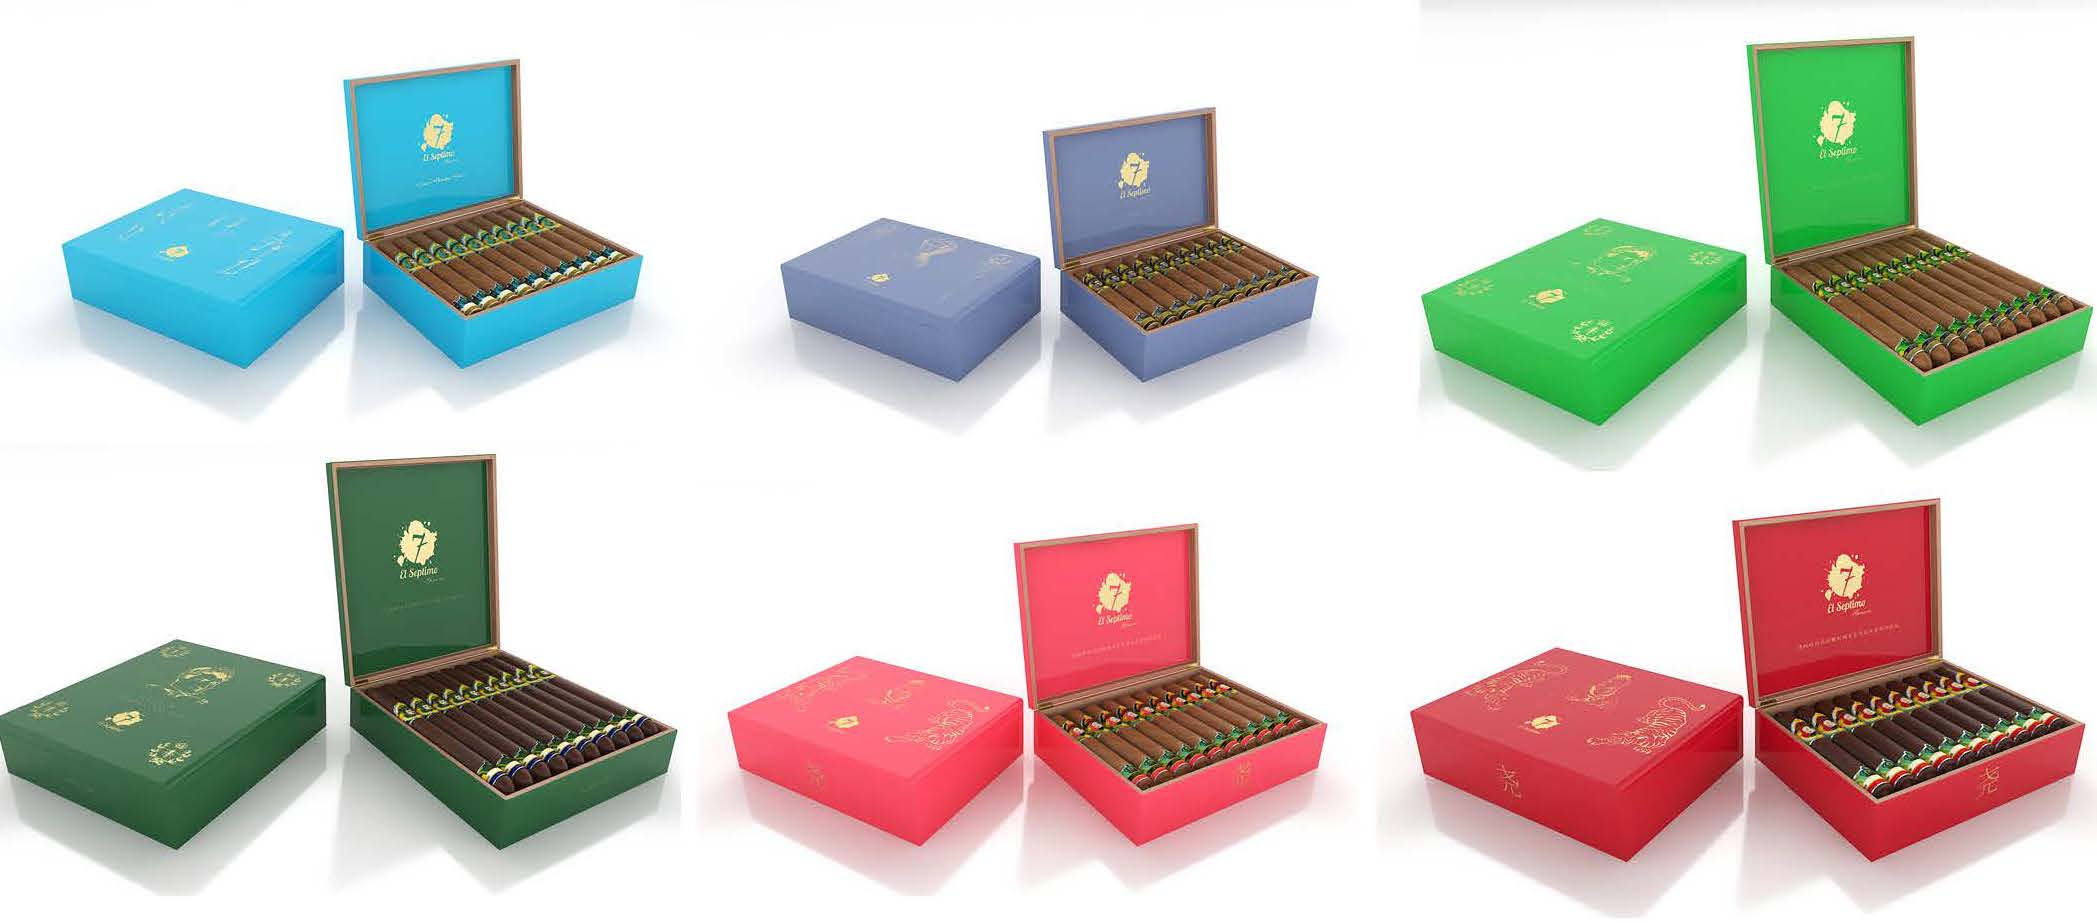 Emperor Collection Boxes